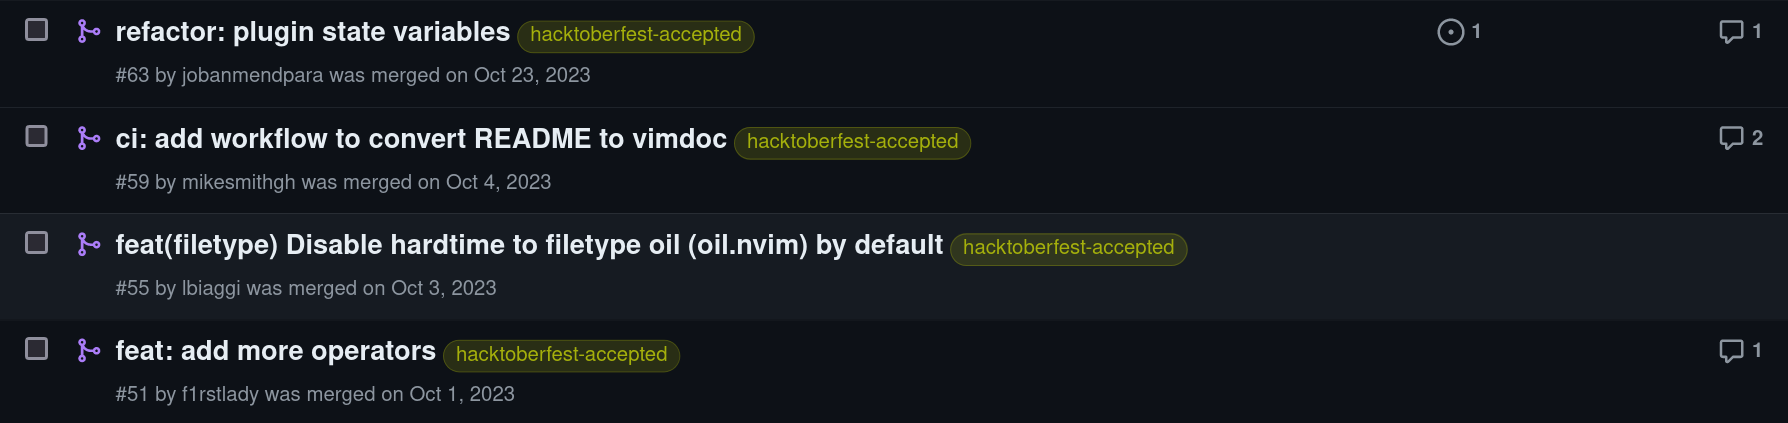 Hacktoberfest pull requests